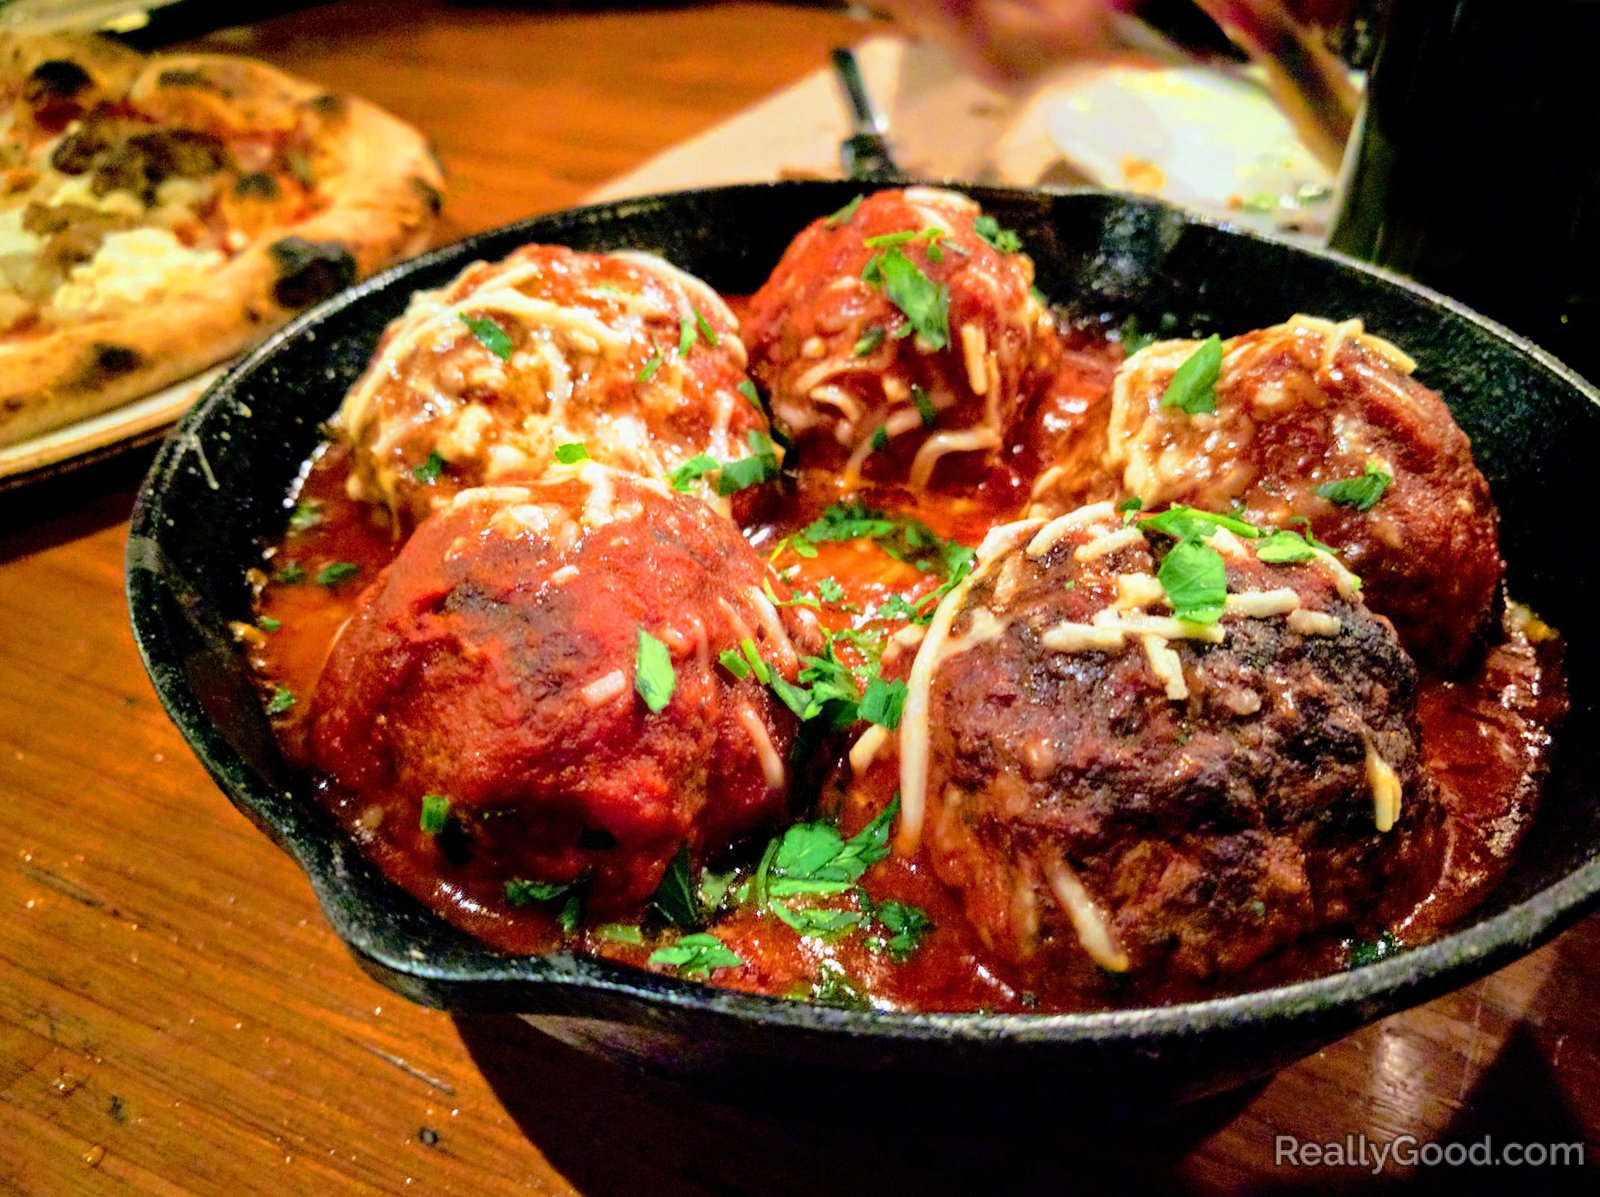 Meatballs at Brick restaurant